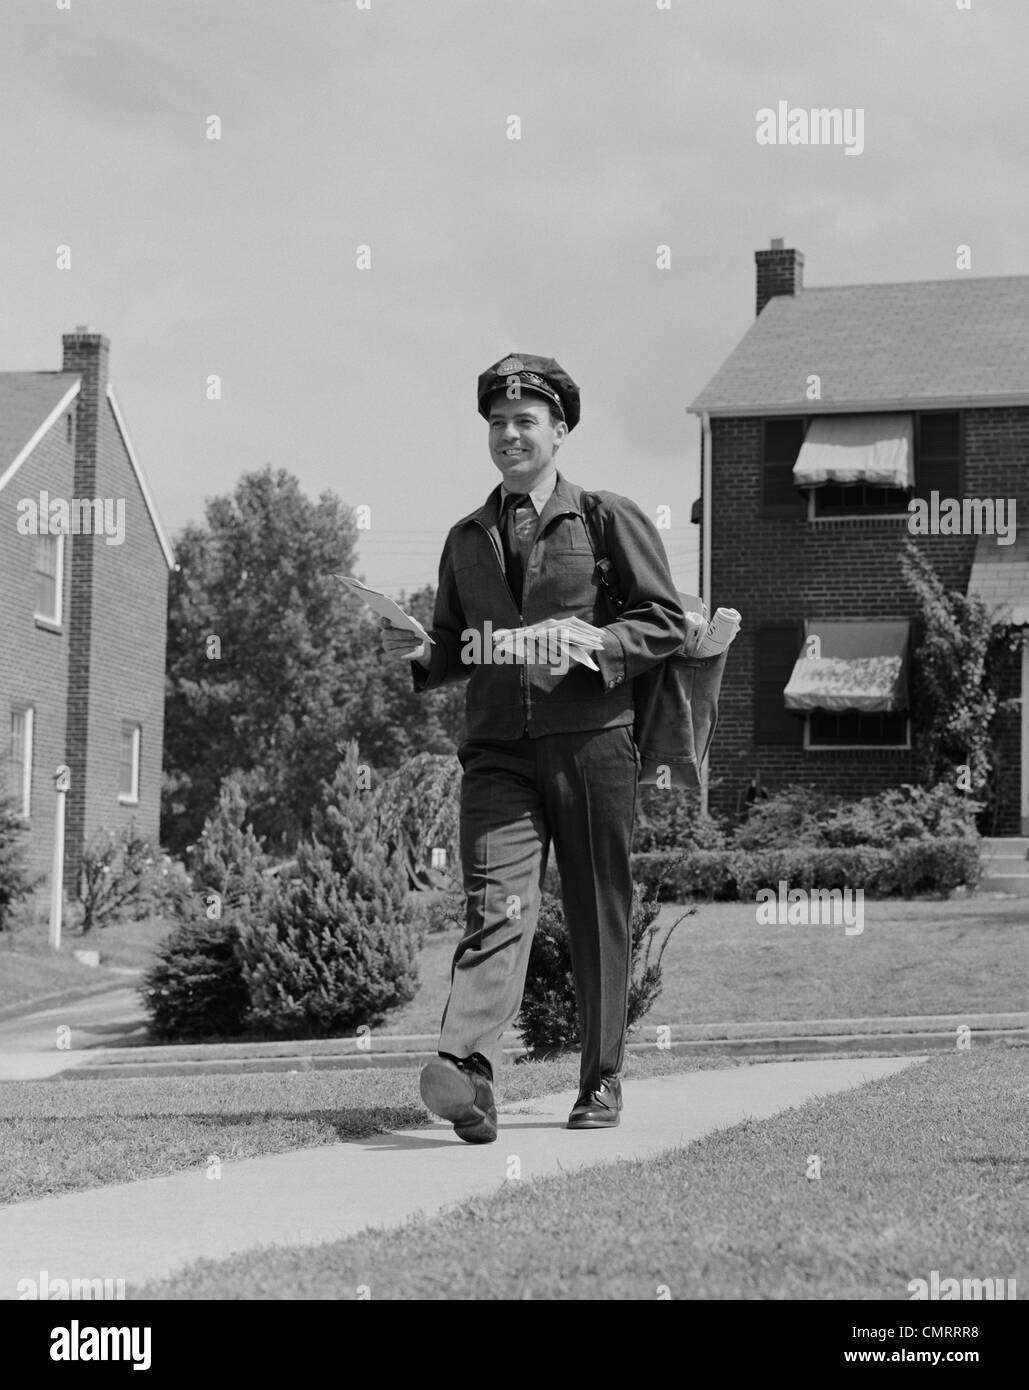 1950s POSTAL MAILMAN WALKING SUBURBAN STREET WEARING UNIFORM DELIVERING MAIL Stock Photo